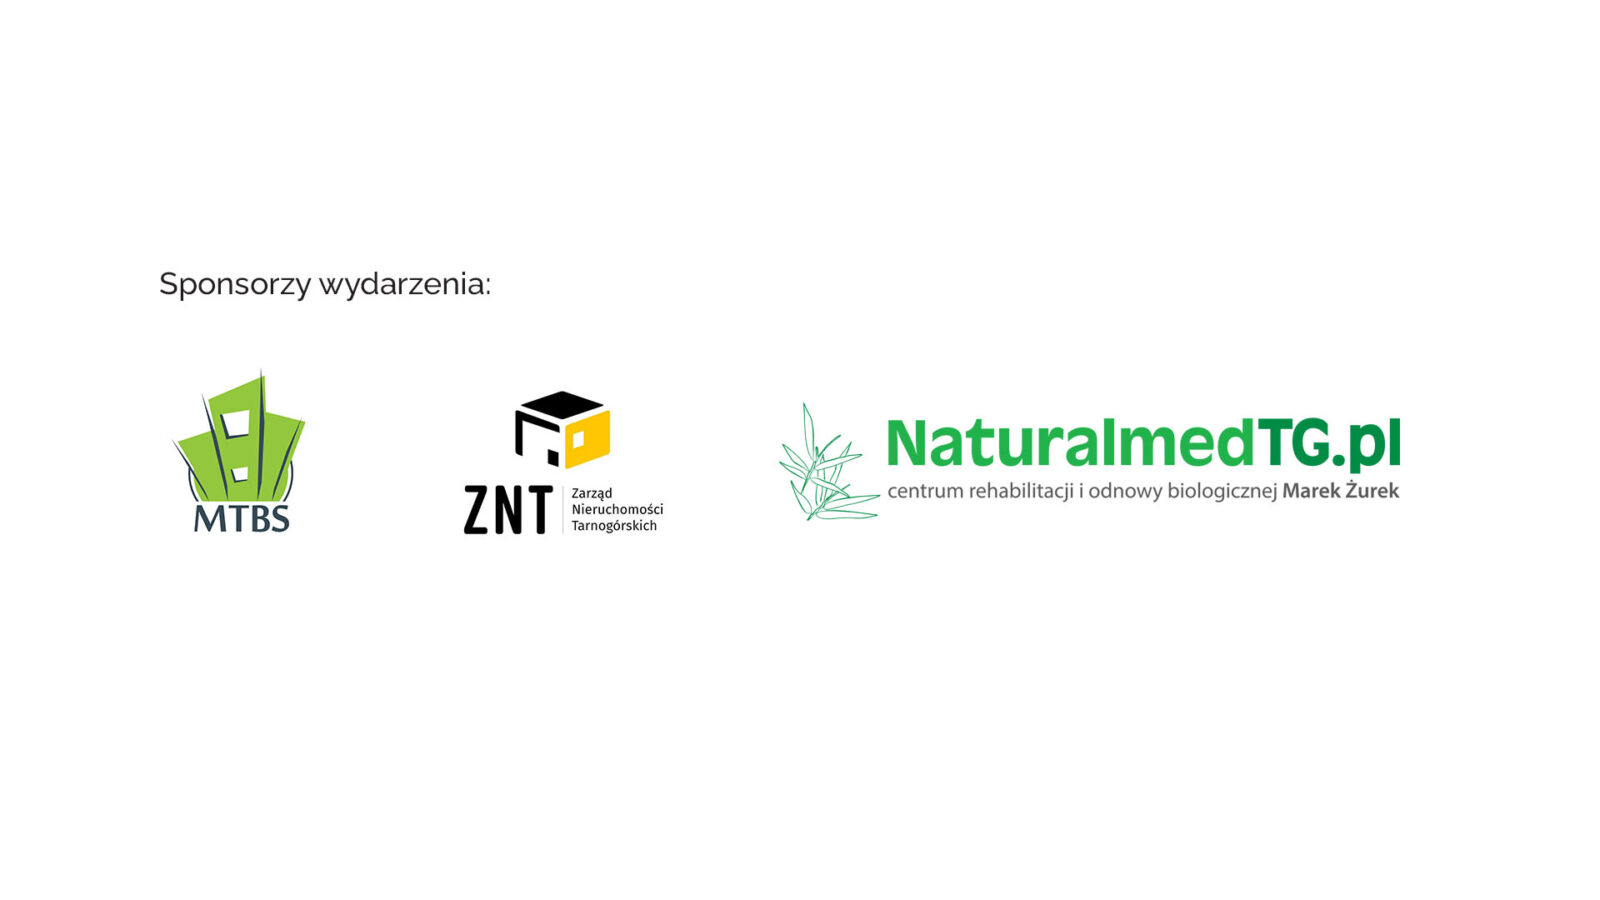 Logotypy firm MTBS, ZNT, Naturalmed.pl